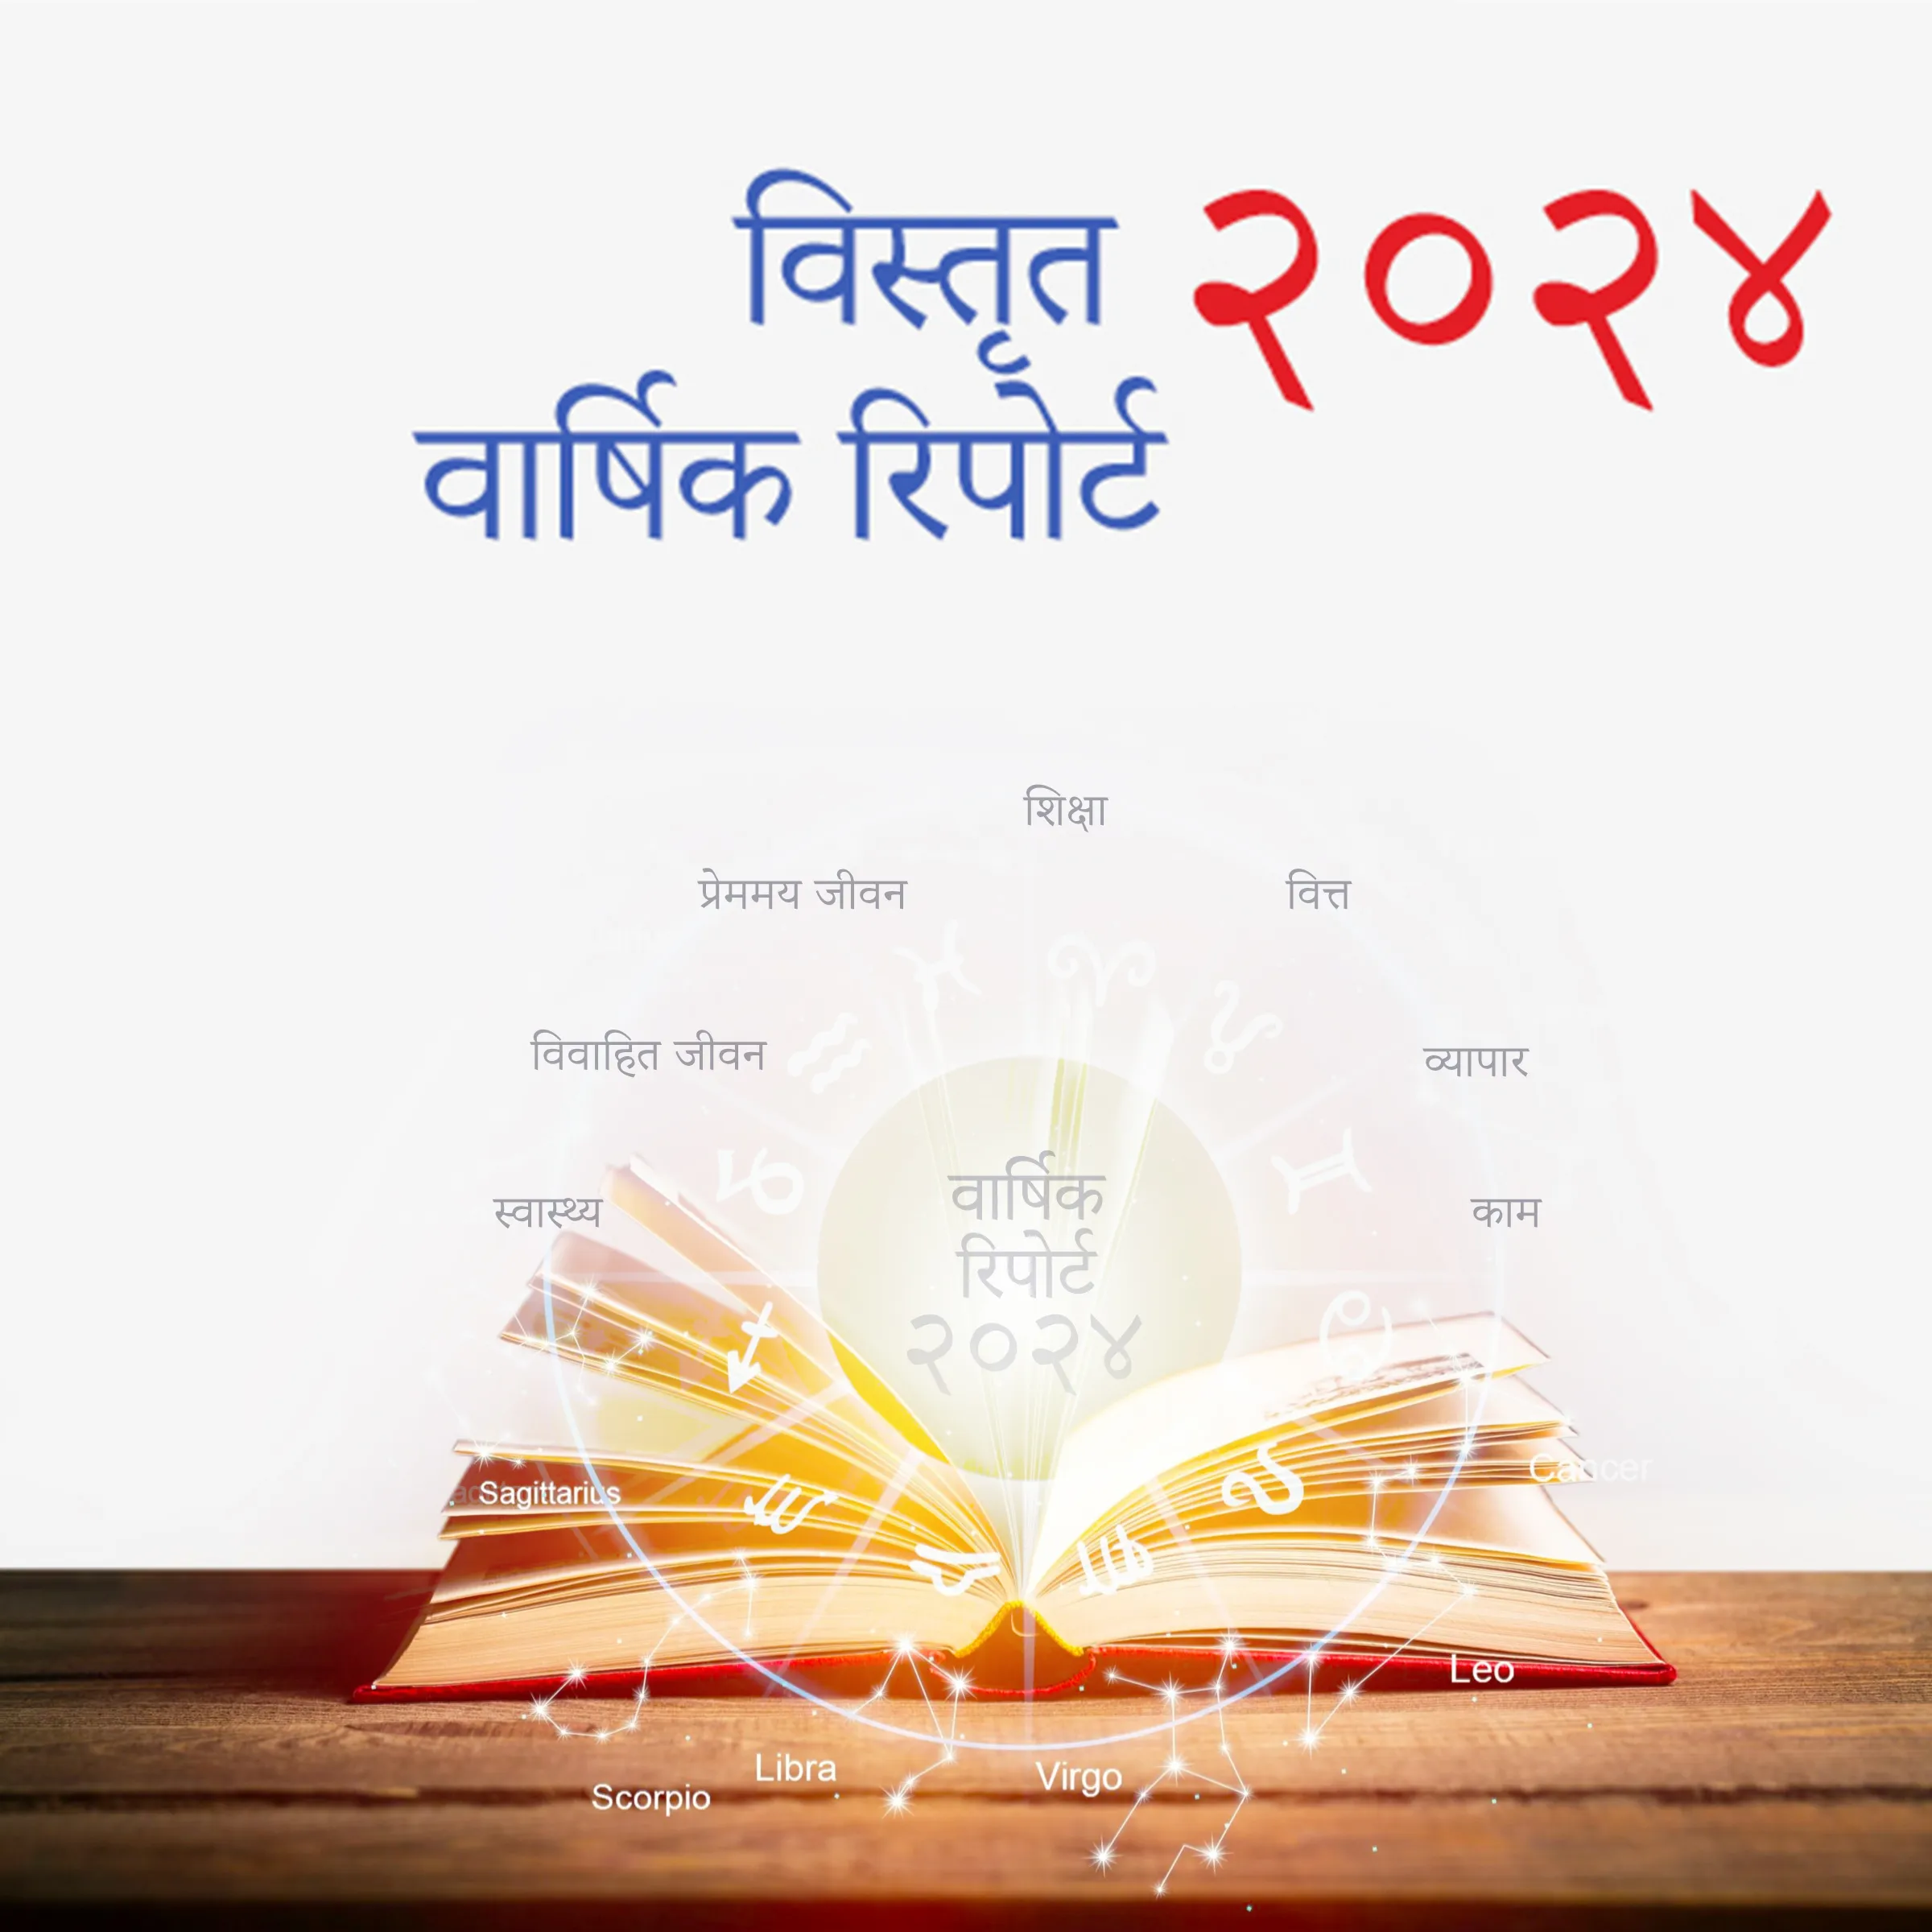 २०२४ विस्तृत वार्षिक रिपोर्ट – Acharya Anvveshi